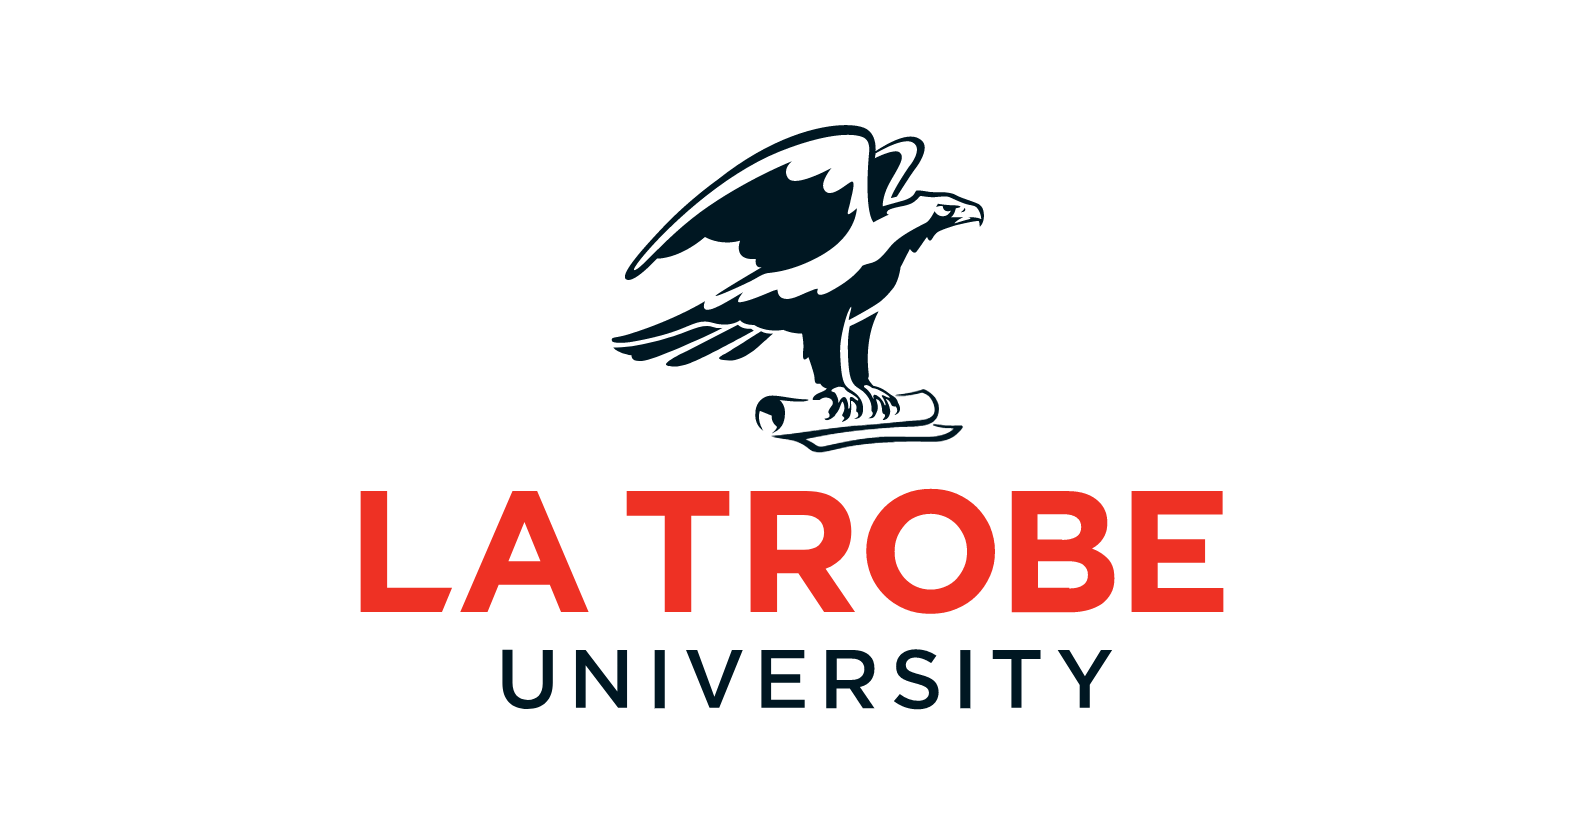 Life U Logo - La Trobe University, Melbourne Victoria Australia